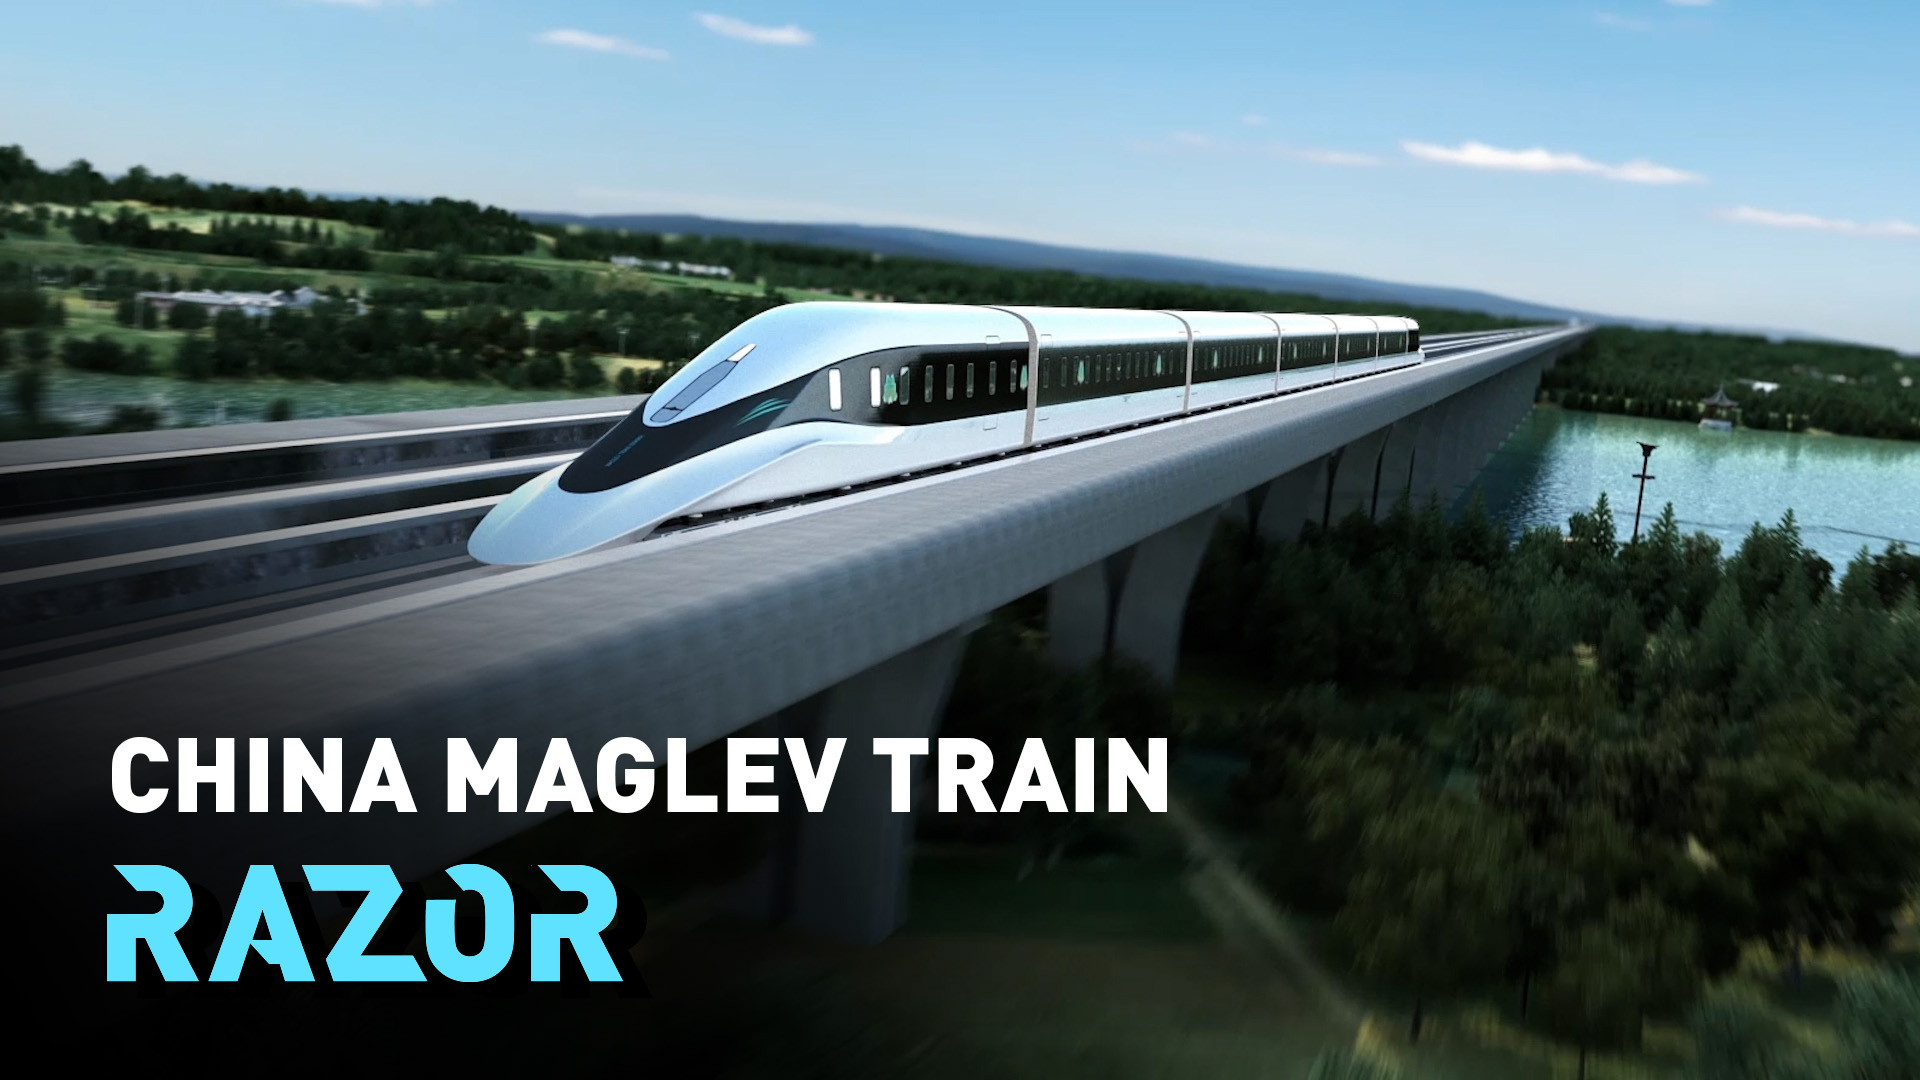 The new maglev train China hopes will break the world speed record - CGTN